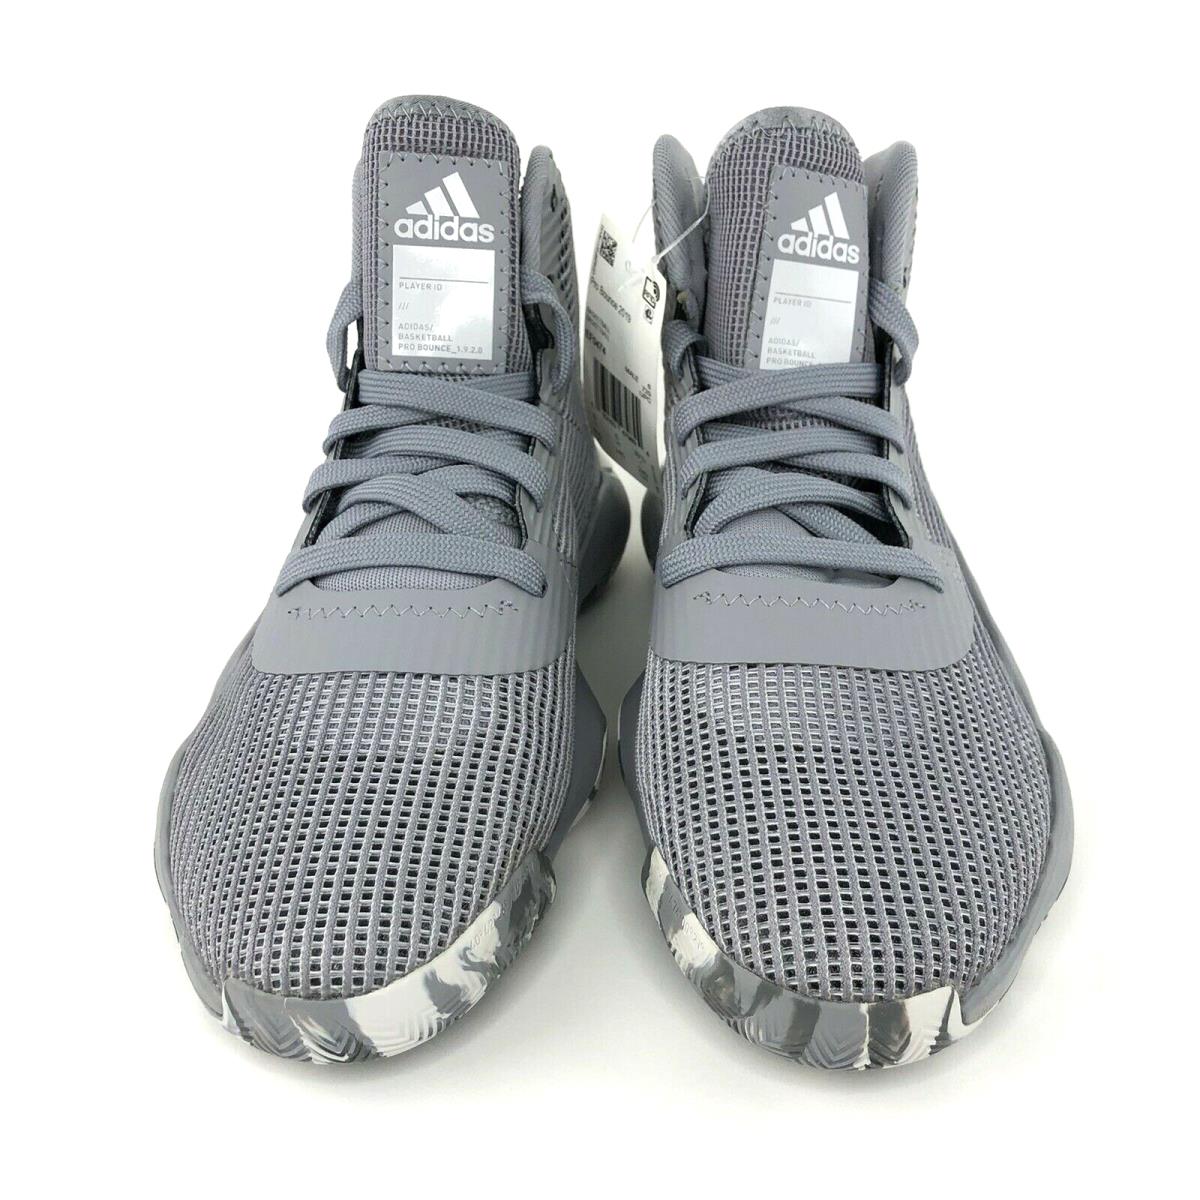 Adidas shoes Pro Bounce - Gray 1